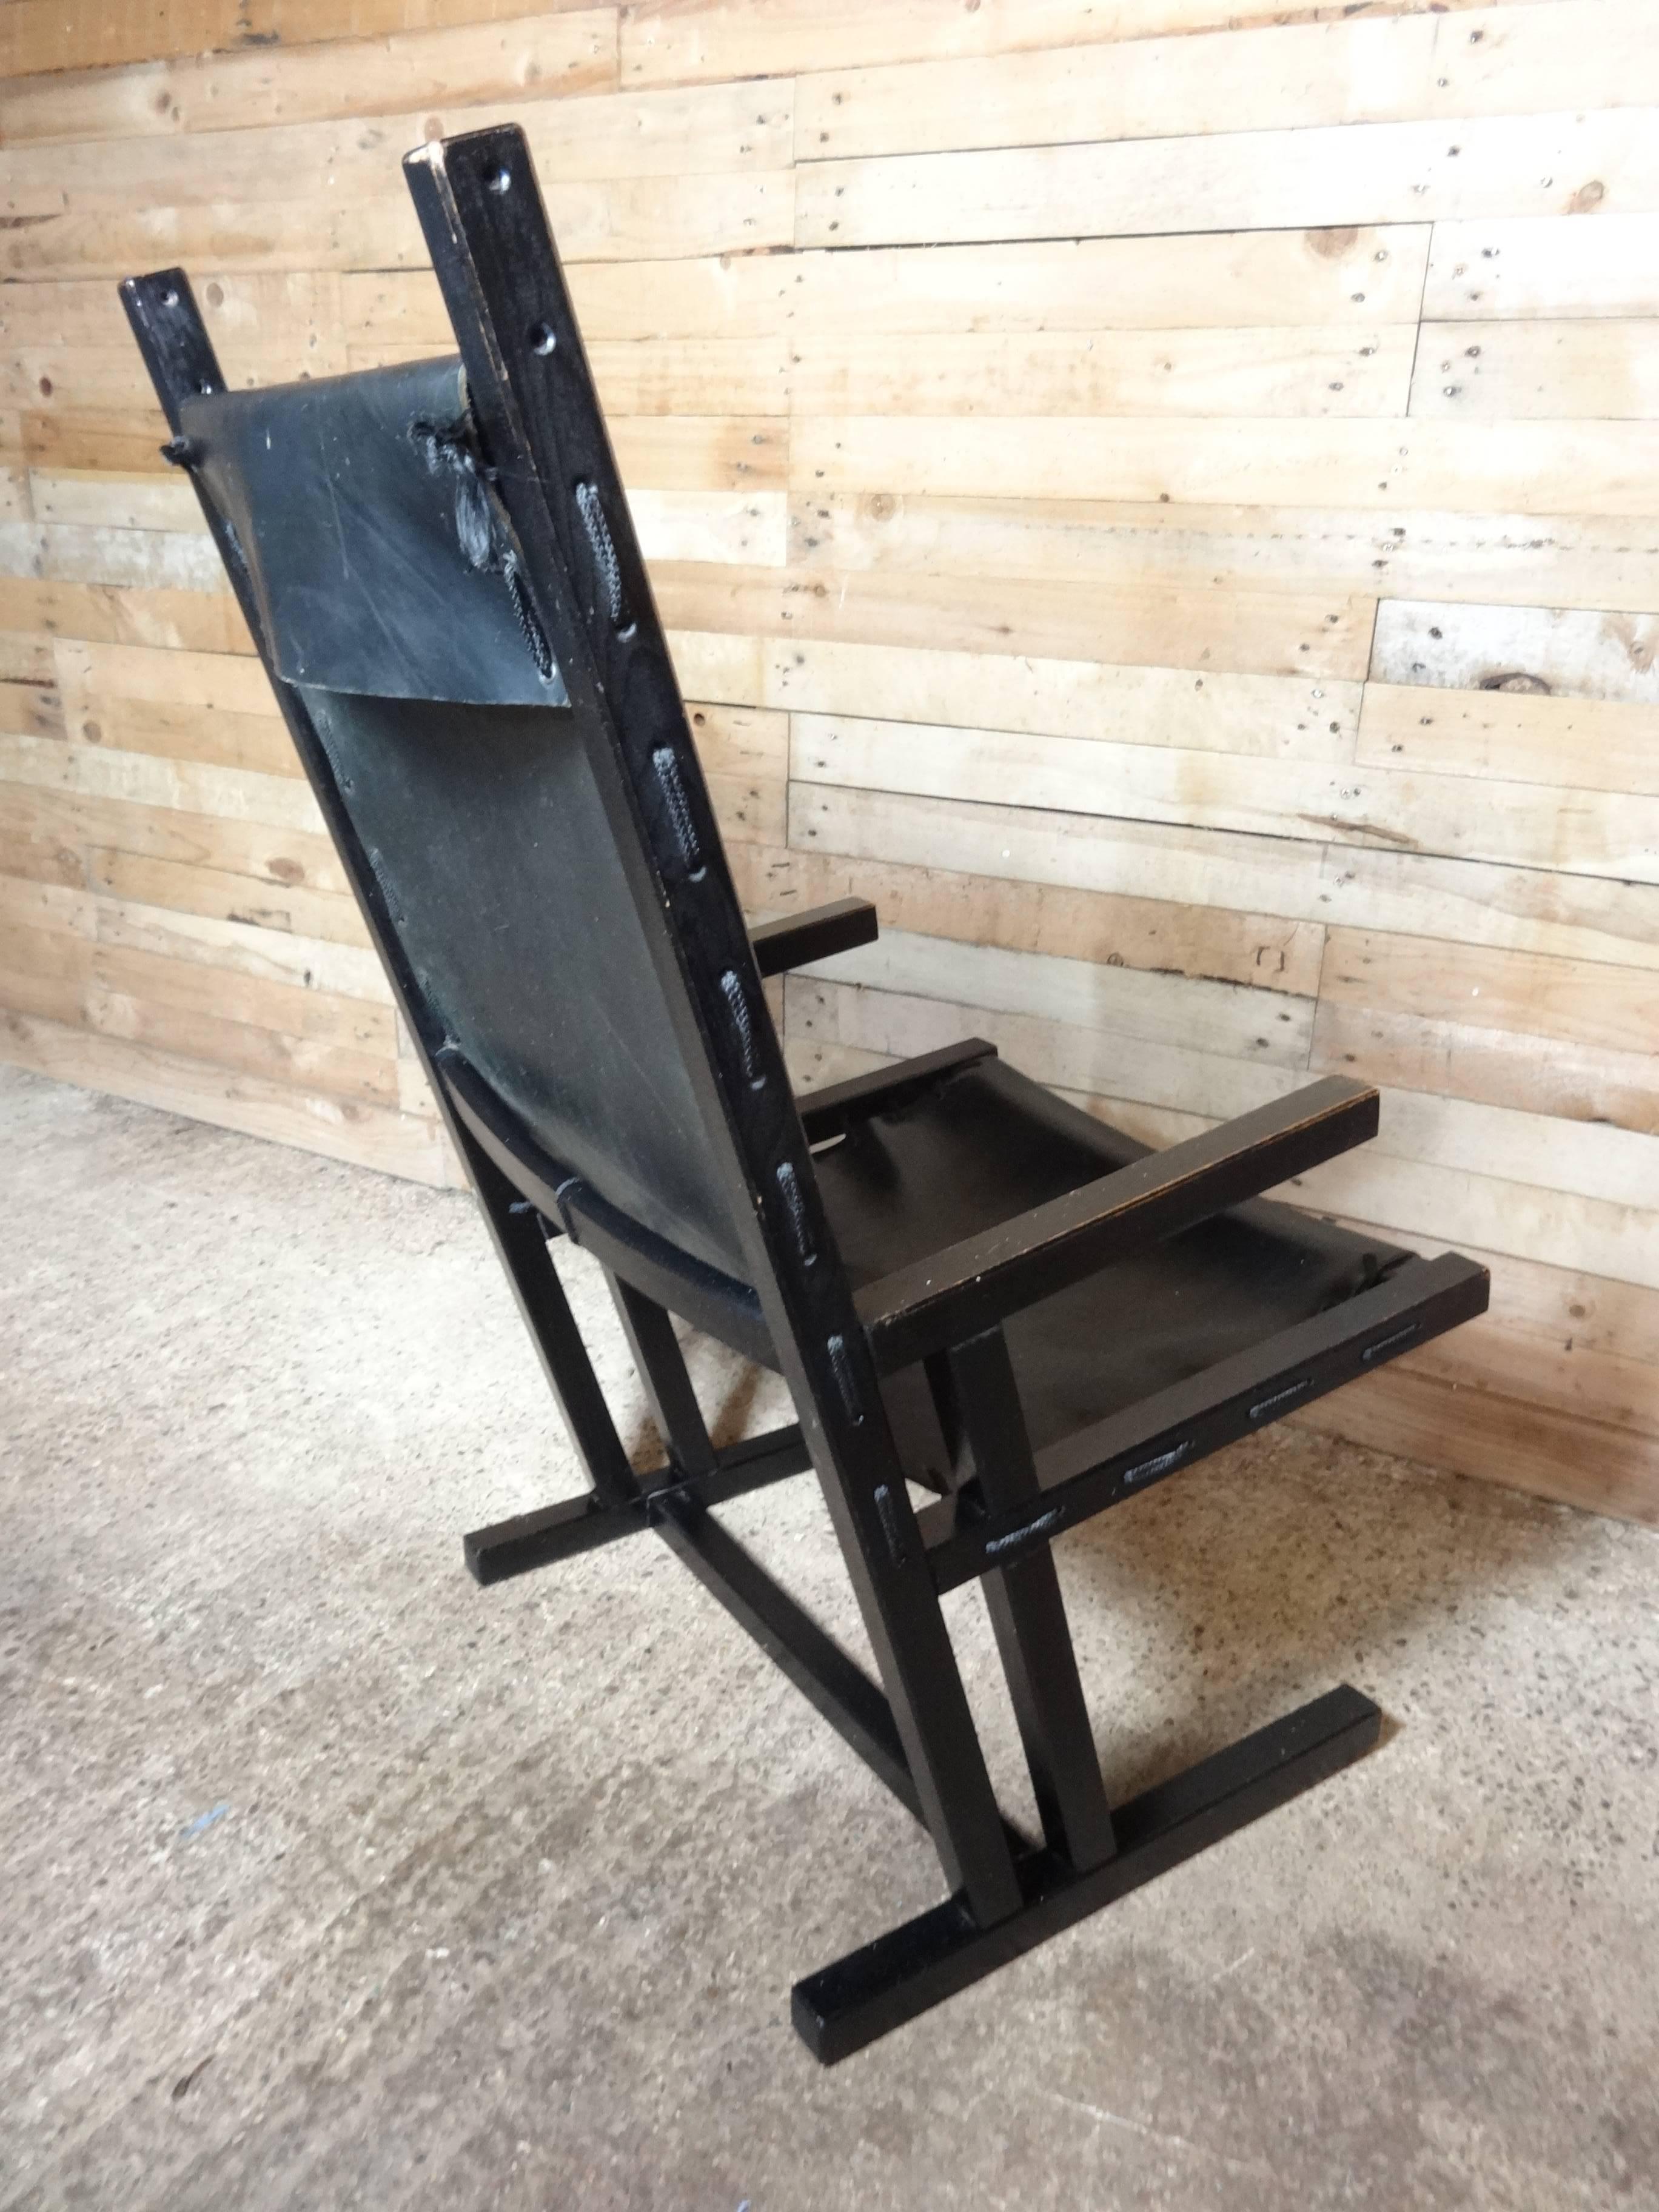 Original holländischer Sessel im 'Rietveld'-Stil aus schwarzem Slingback-Leder.

H 104cm, T 75cm, B 60cm, Sitz H 38cm